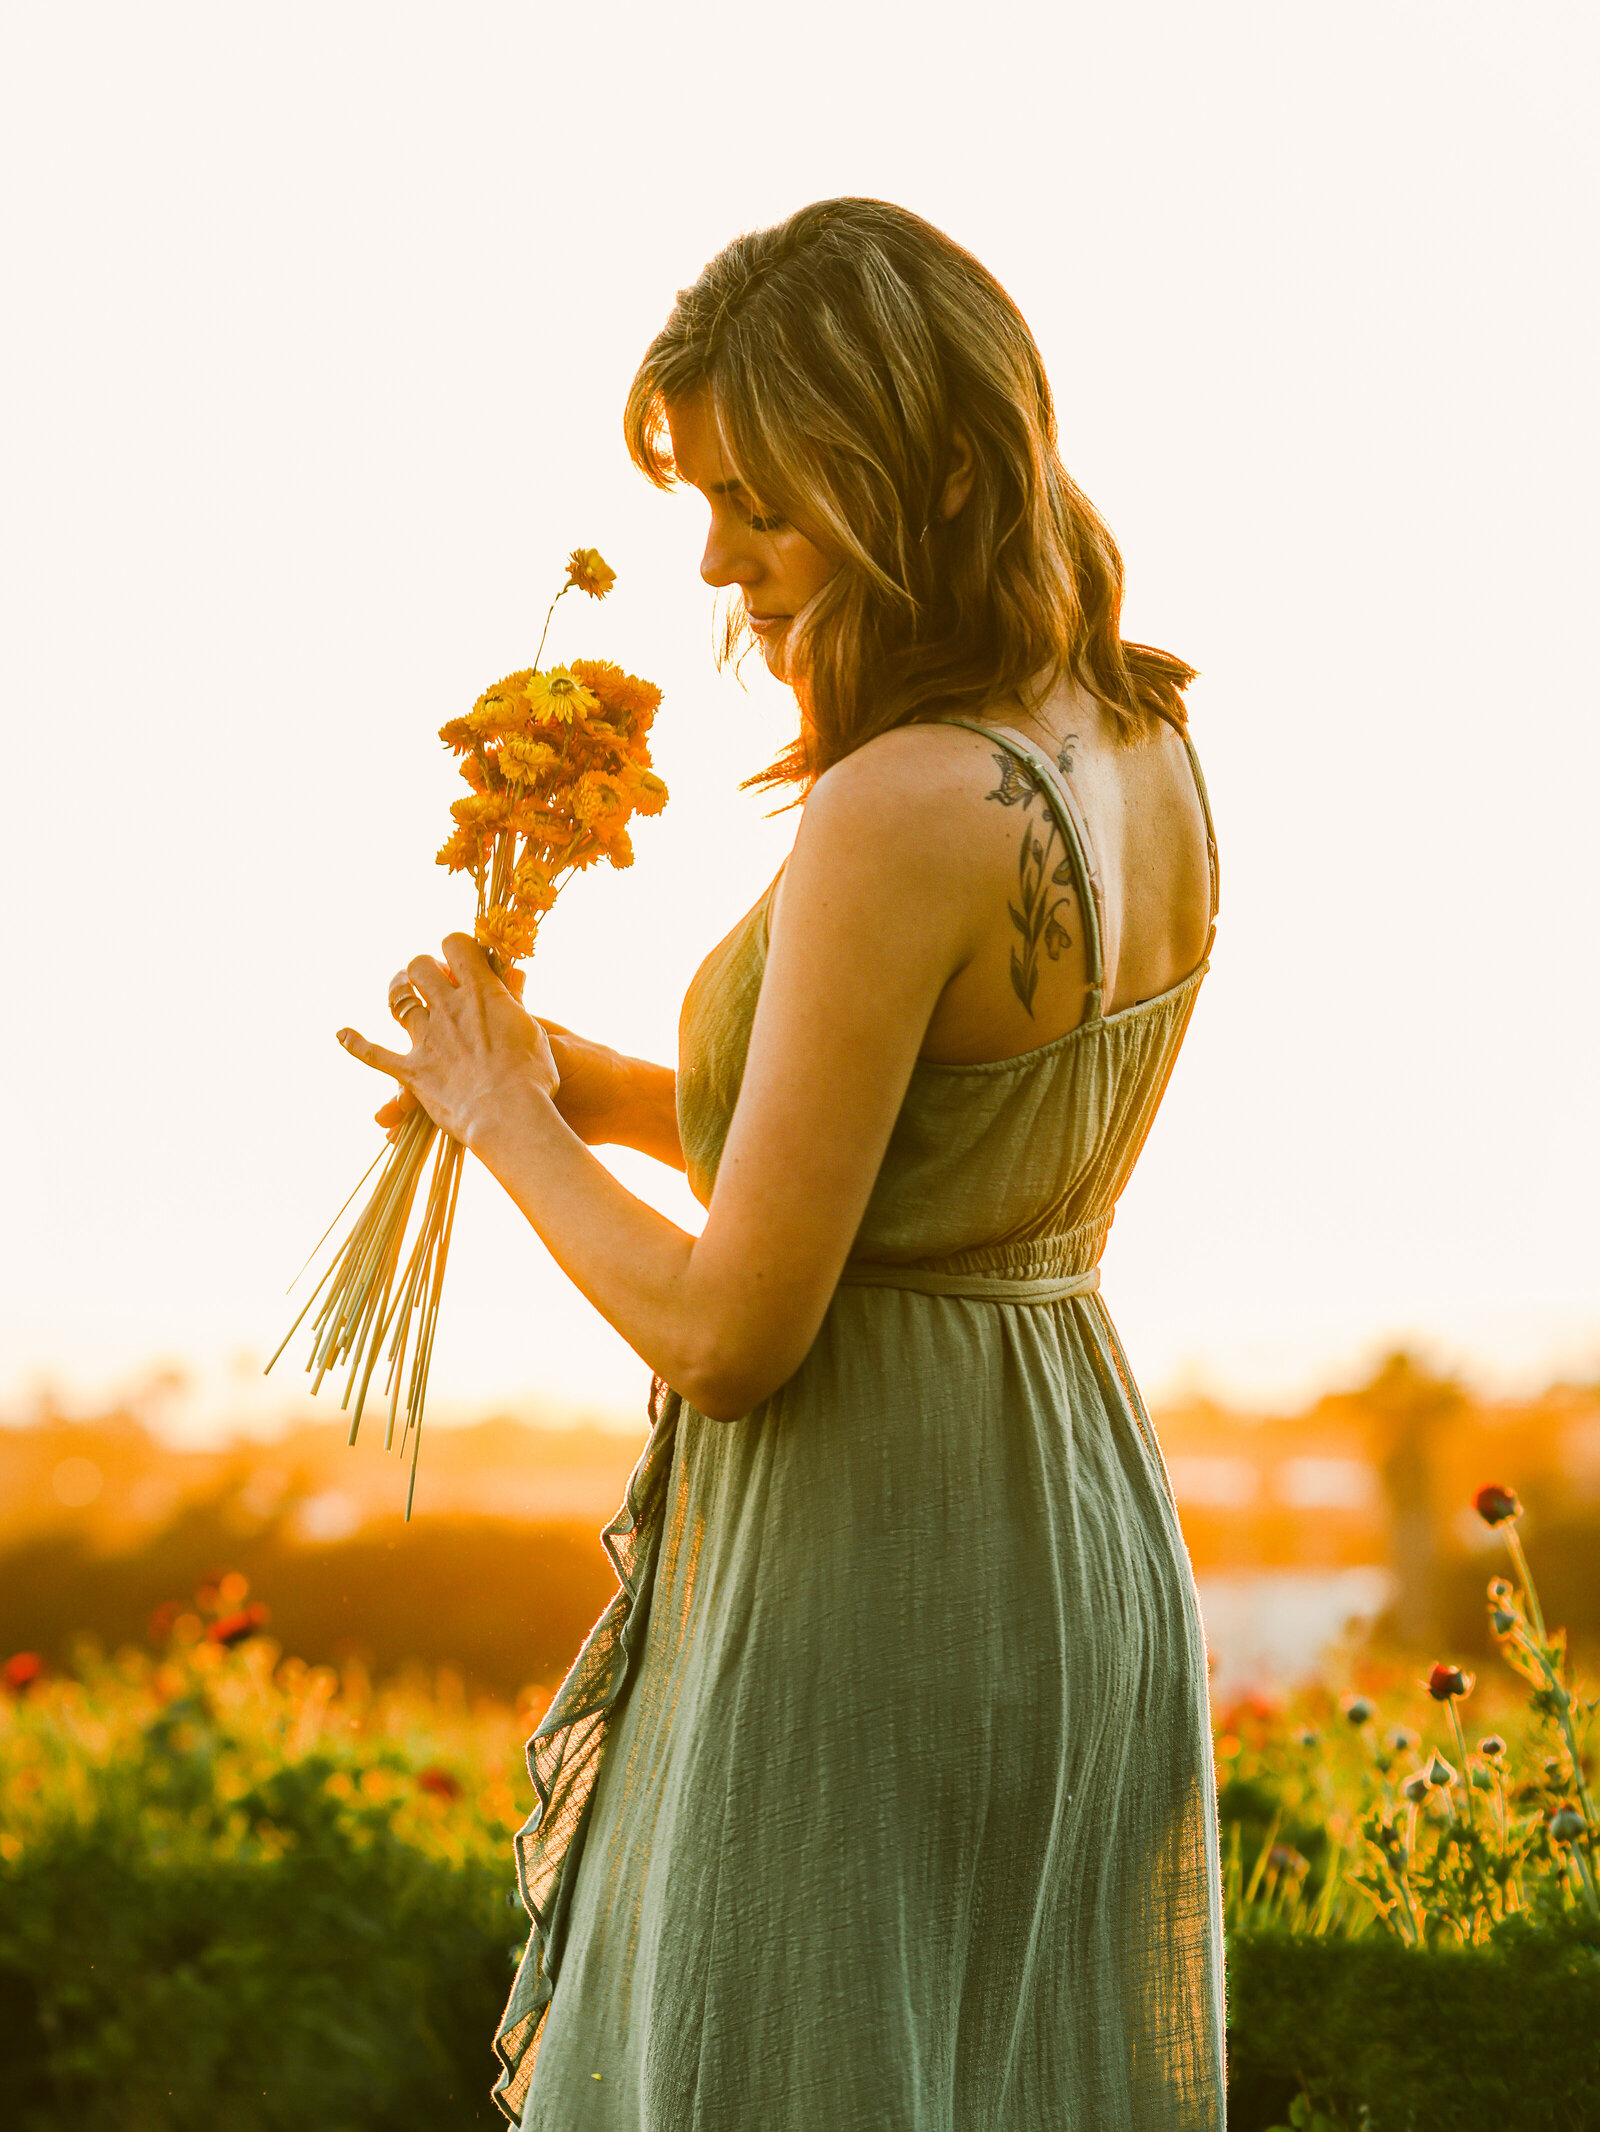 girl at flower fields in teal dress